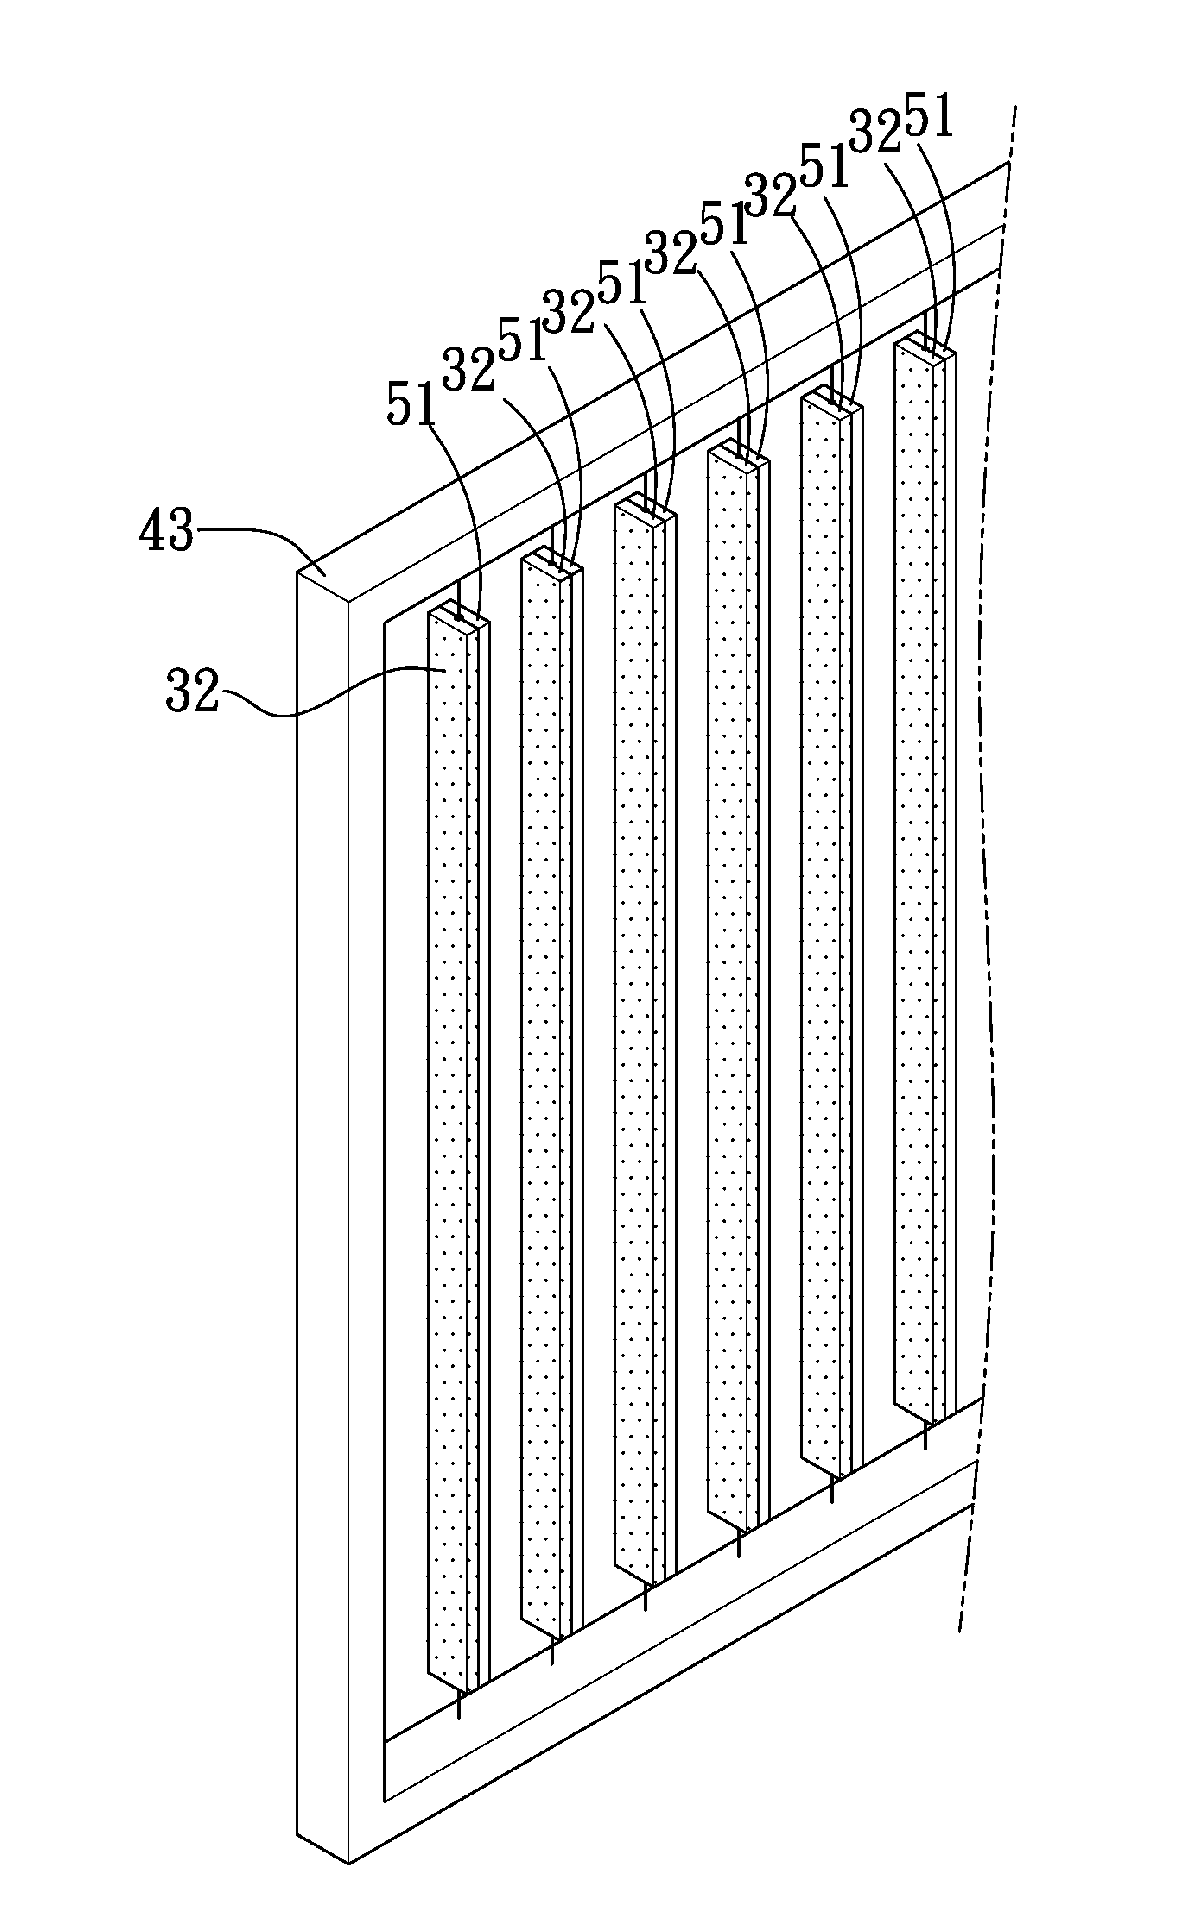 Flexible thin film solar shutter